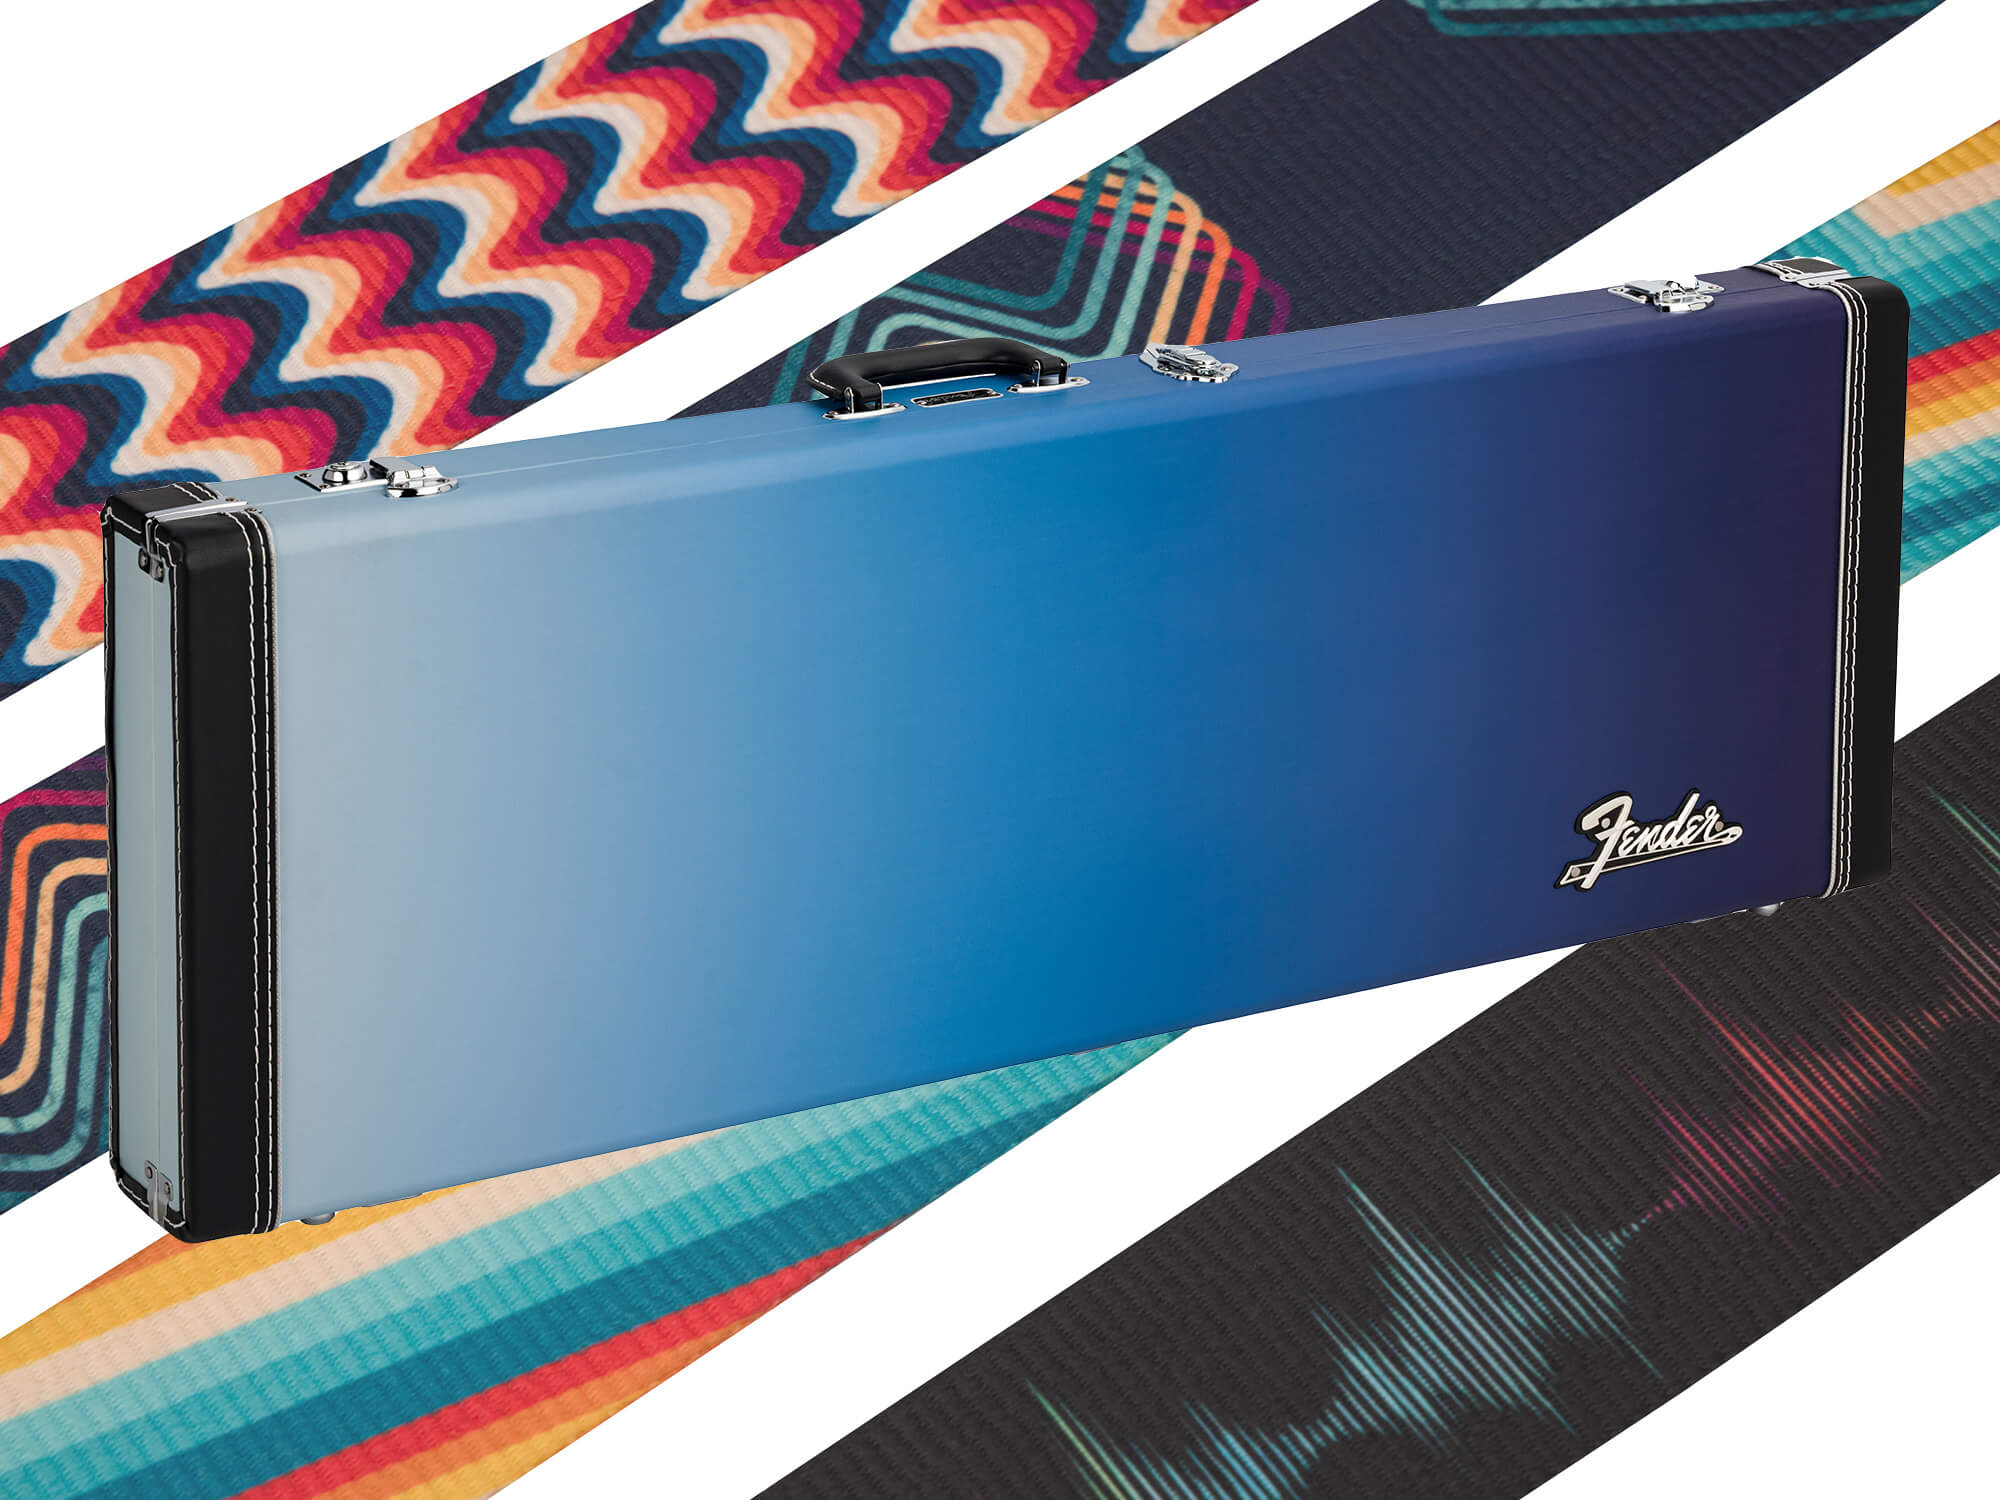 Fender Retro Straps and a blue Ombre Case